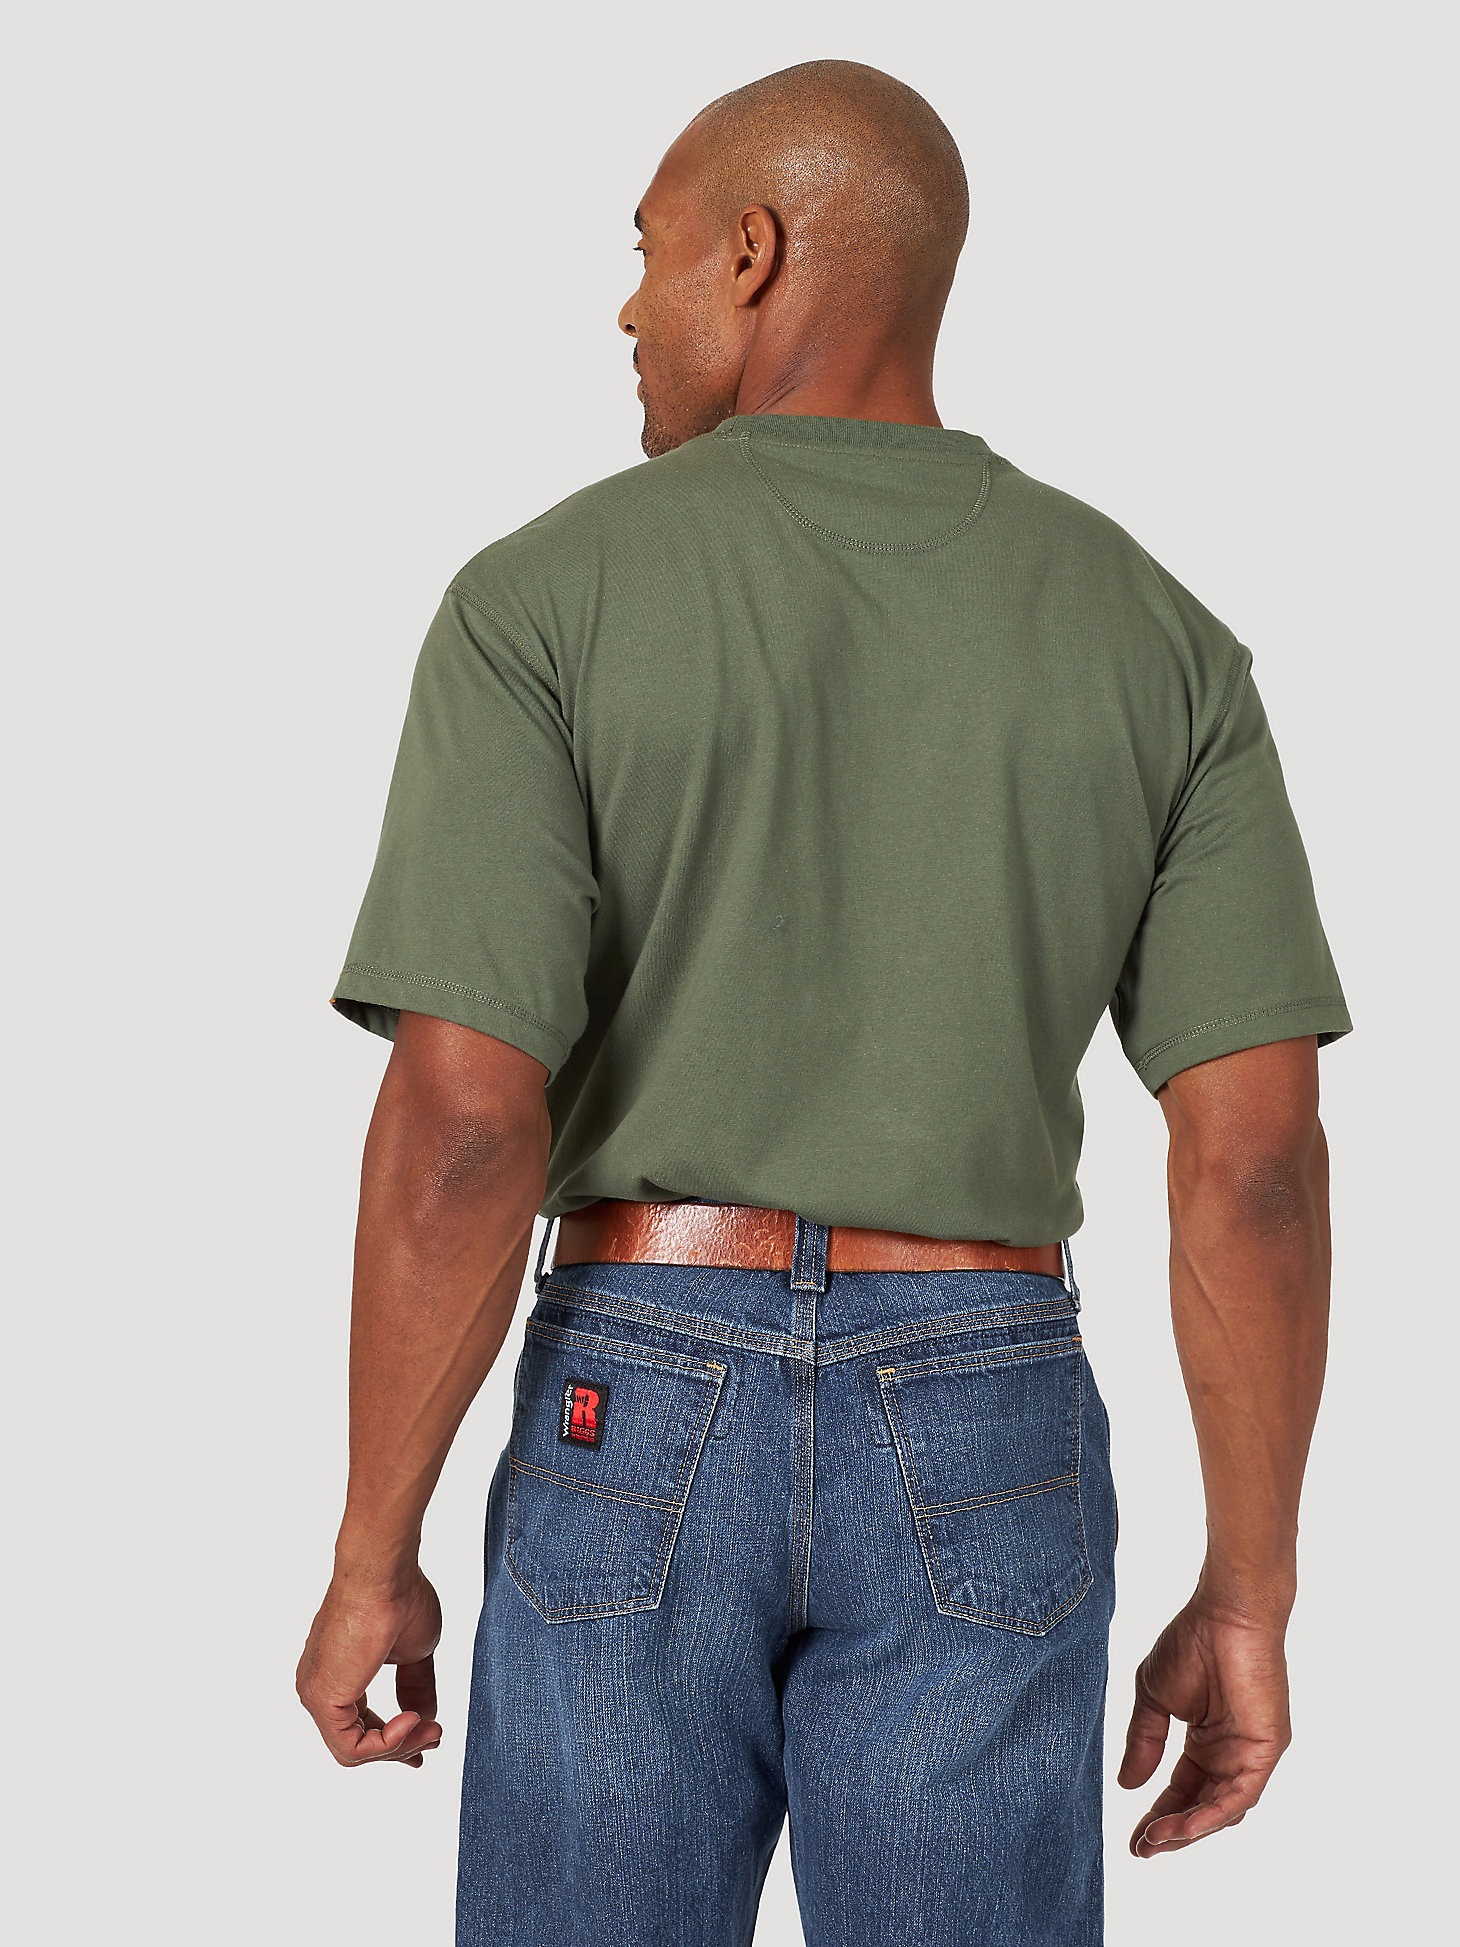 Wrangler® RIGGS Workwear® Short Sleeve 1 Pocket Performance T-Shirt in Hazel Green alternative view 1